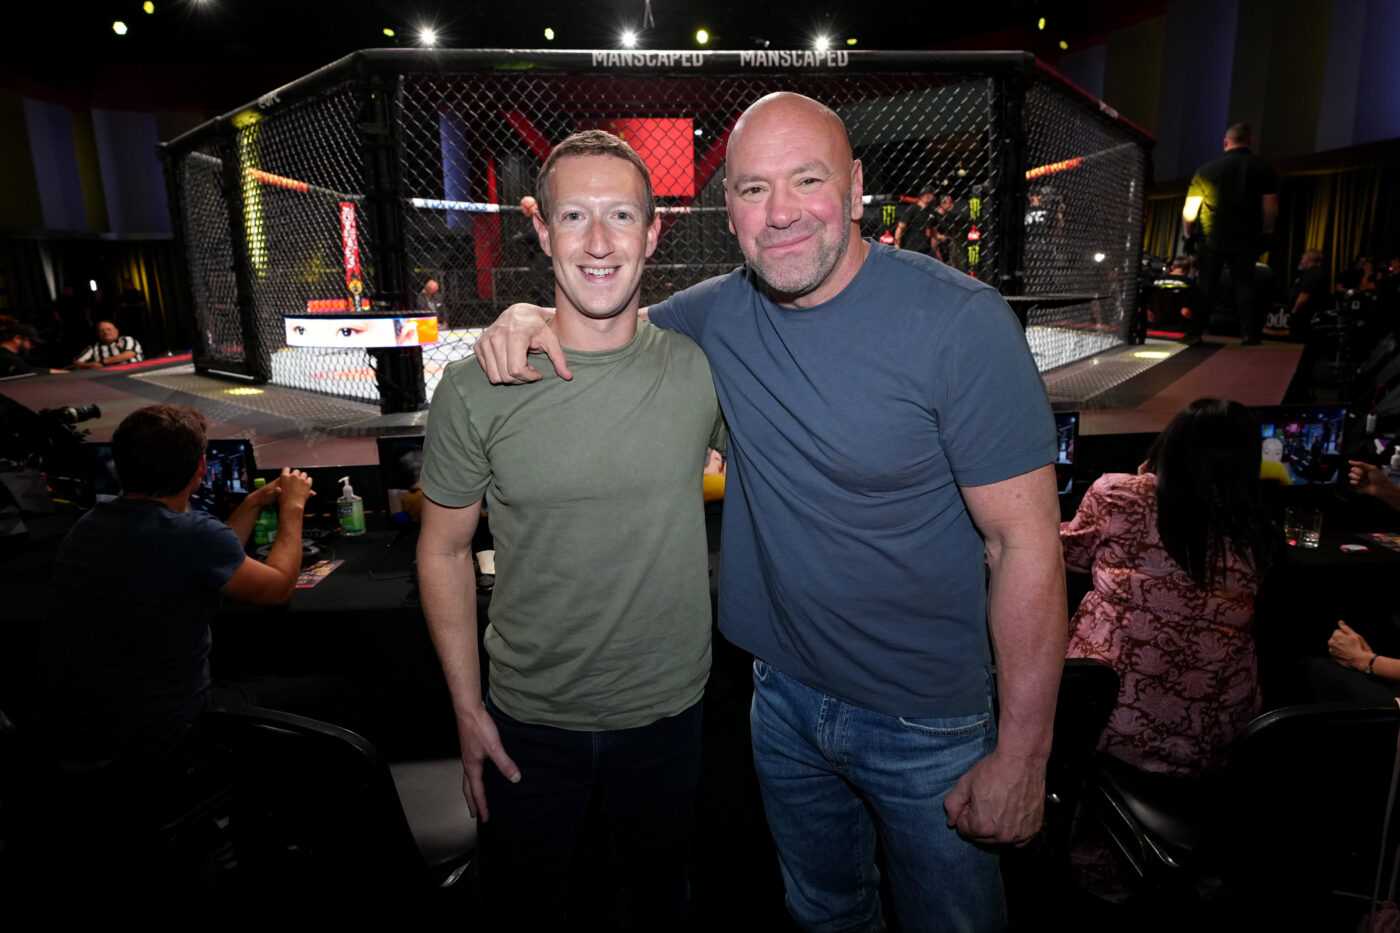 Billionaire Mark Zuckerberg’s Latest Stunt In Preparation For Elon Musk MMA Fight Leaves His Wife Fuming